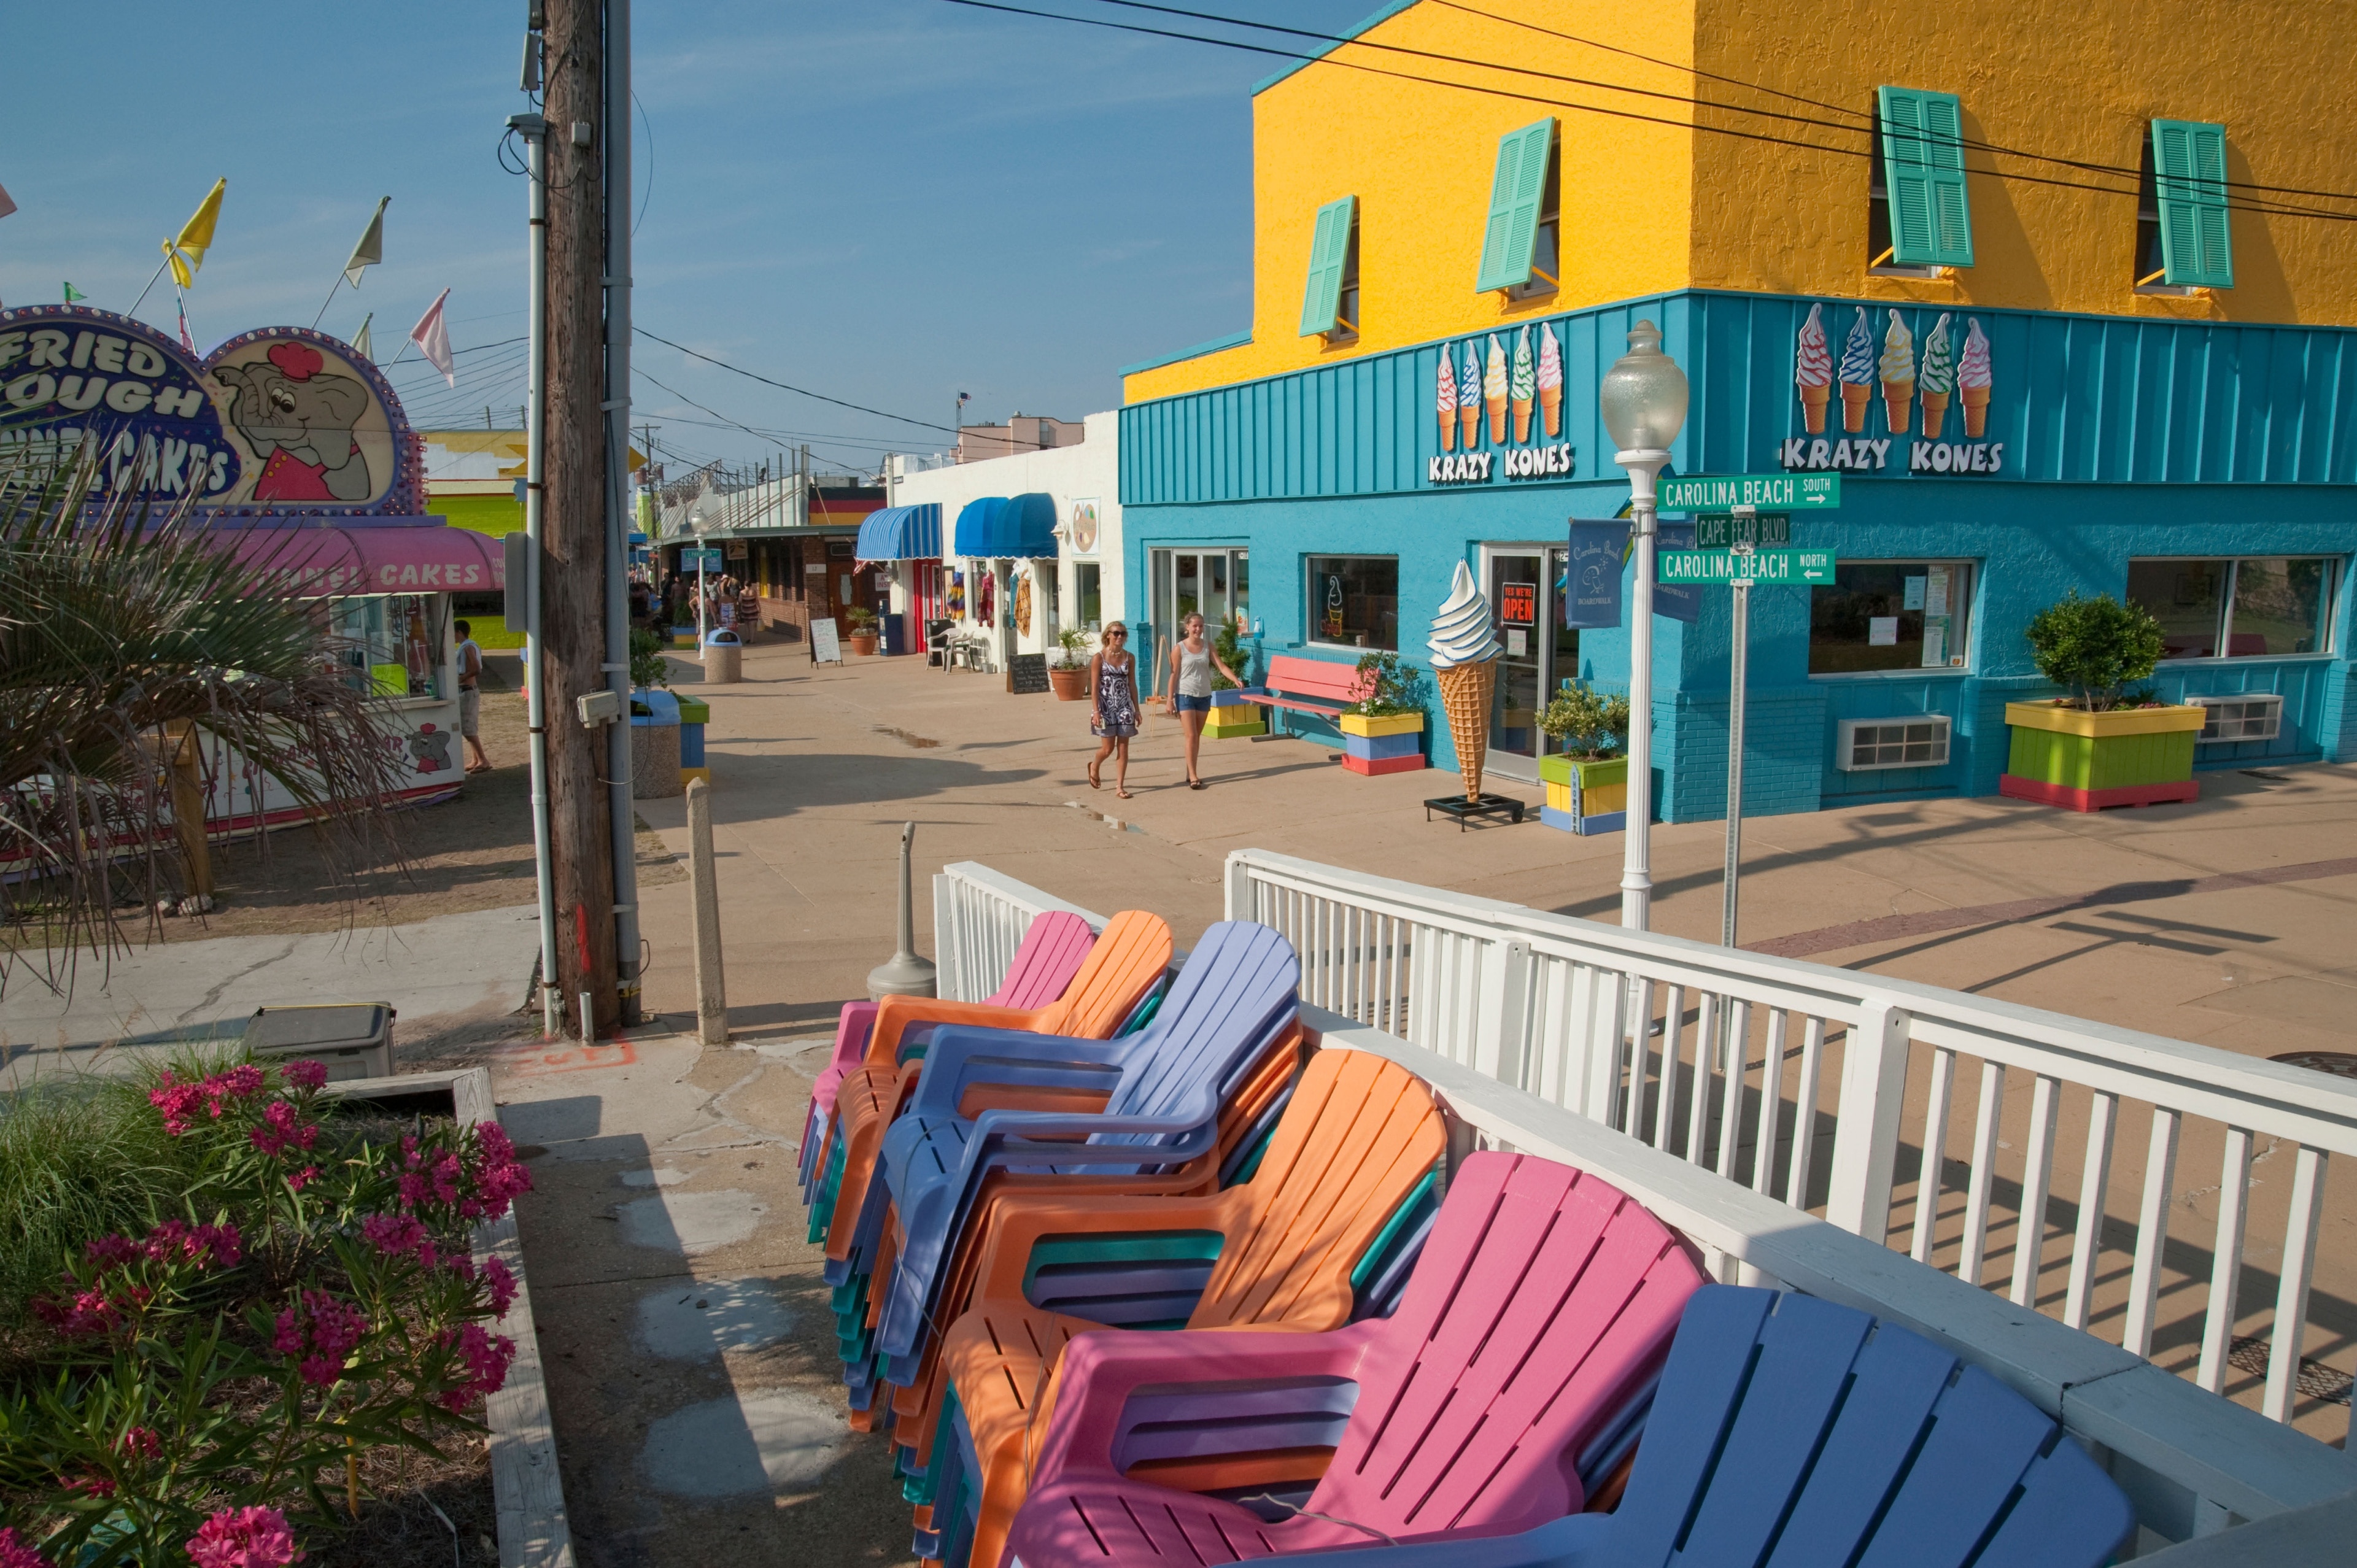 Parc de loisirs Carolina Beach Boardwalk, NC, USA locations de